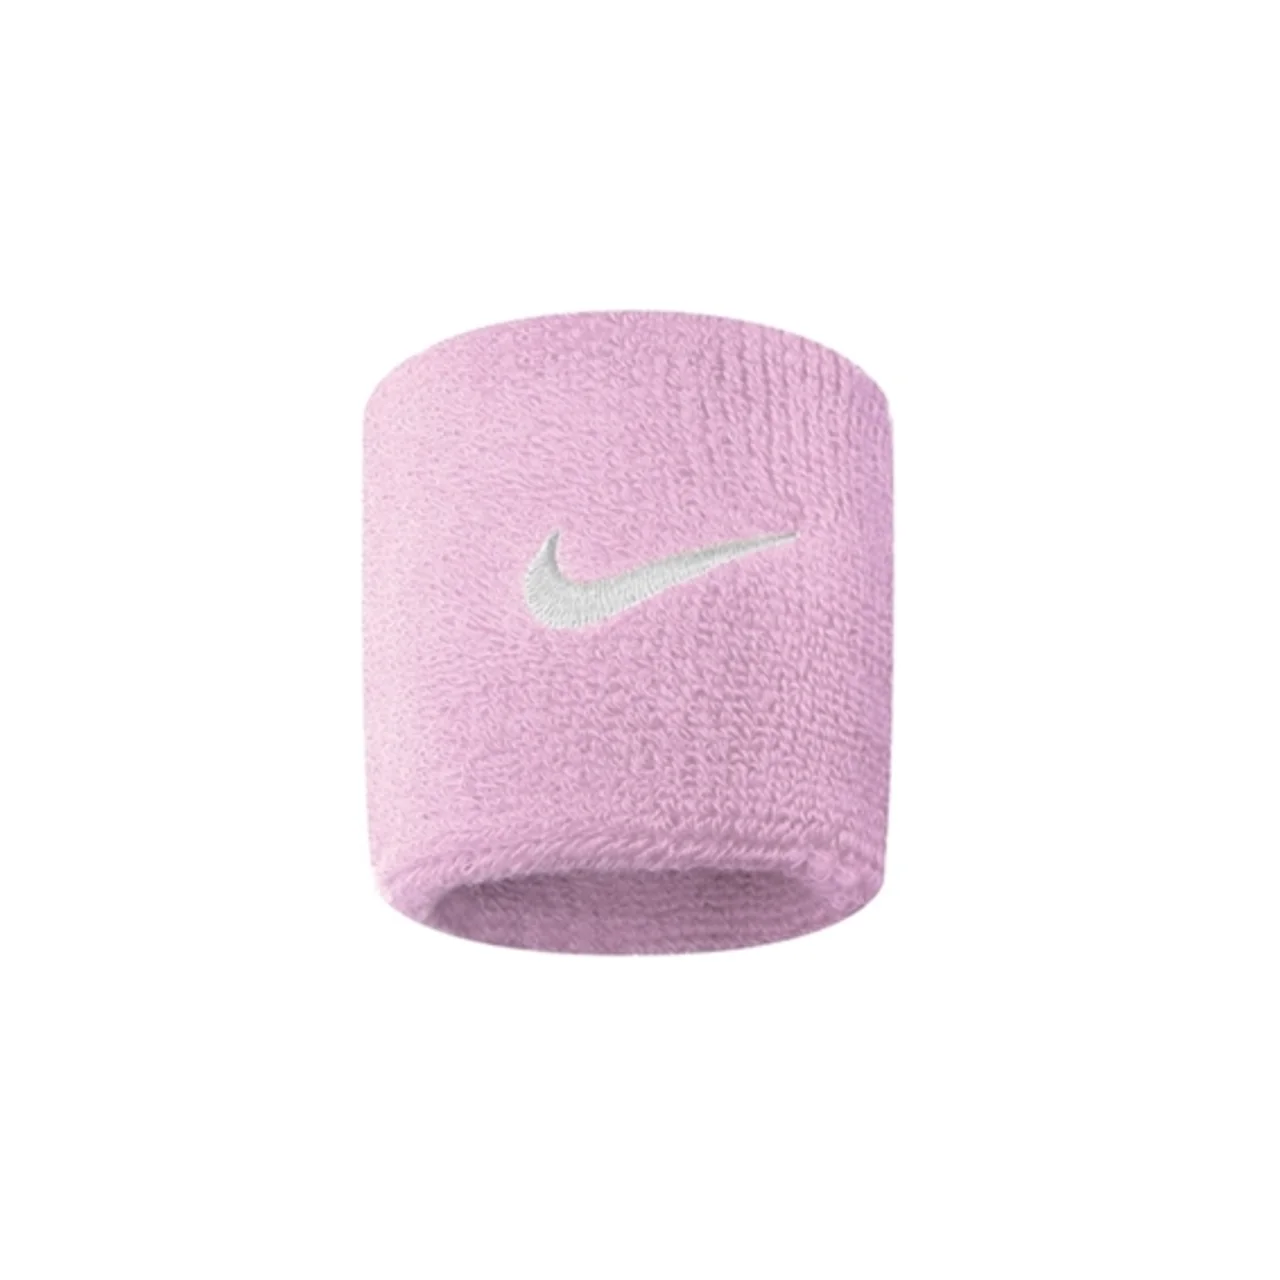 Nike Wristband Pink/White